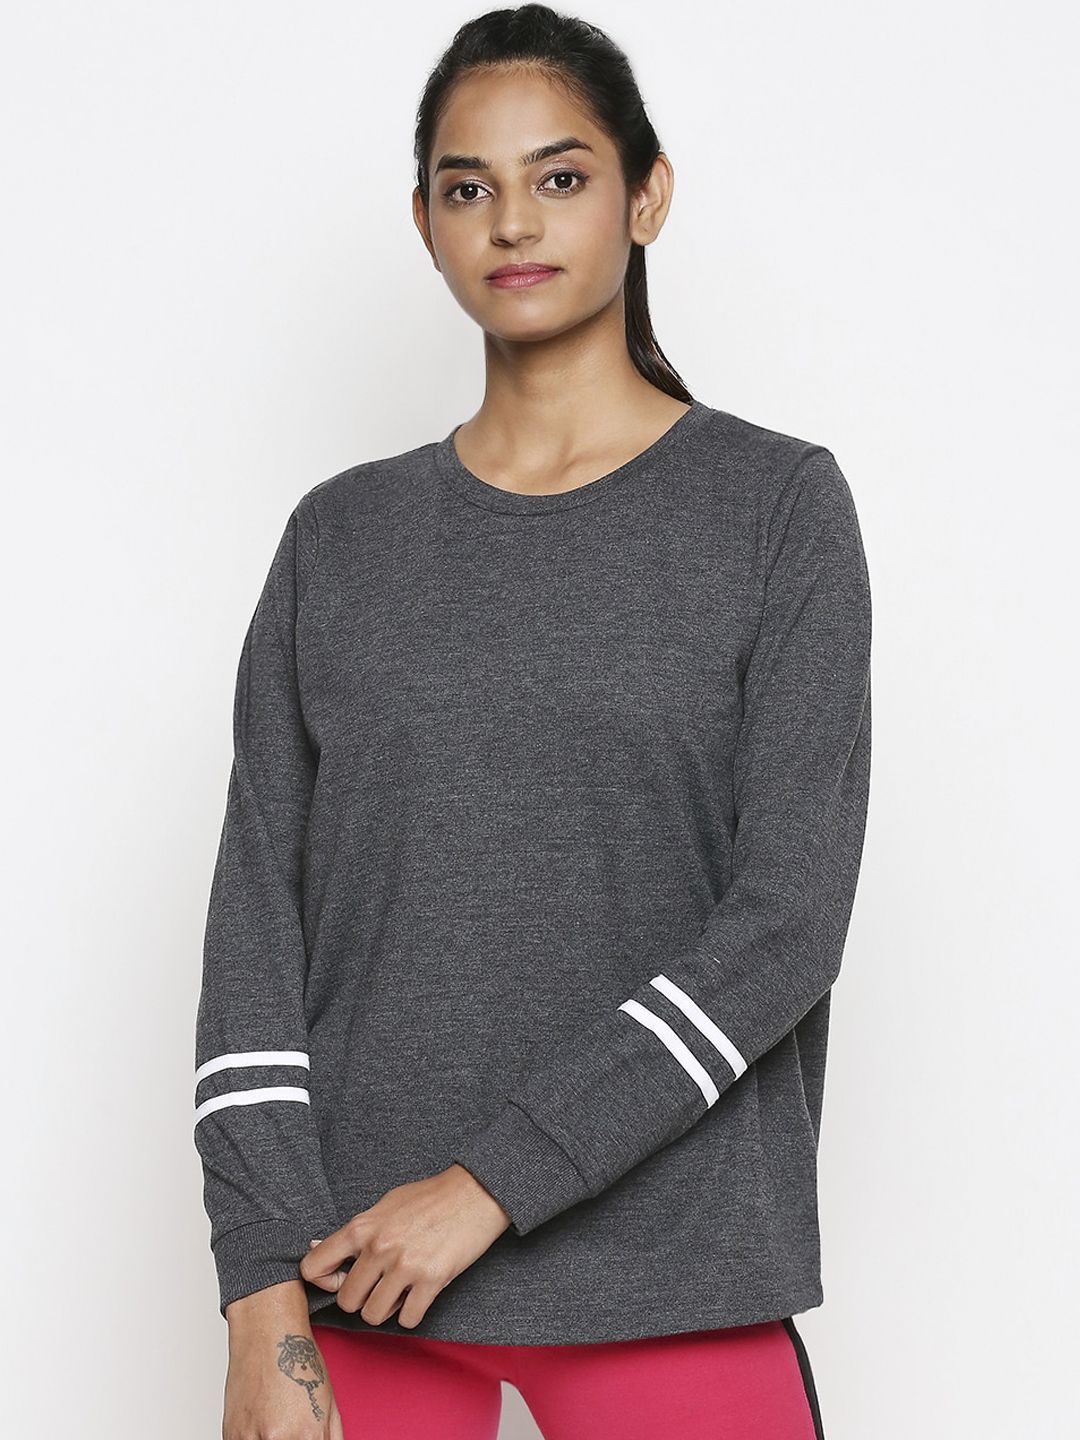 Ajile by Pantaloons Women Grey Solid Sweatshirt Price in India